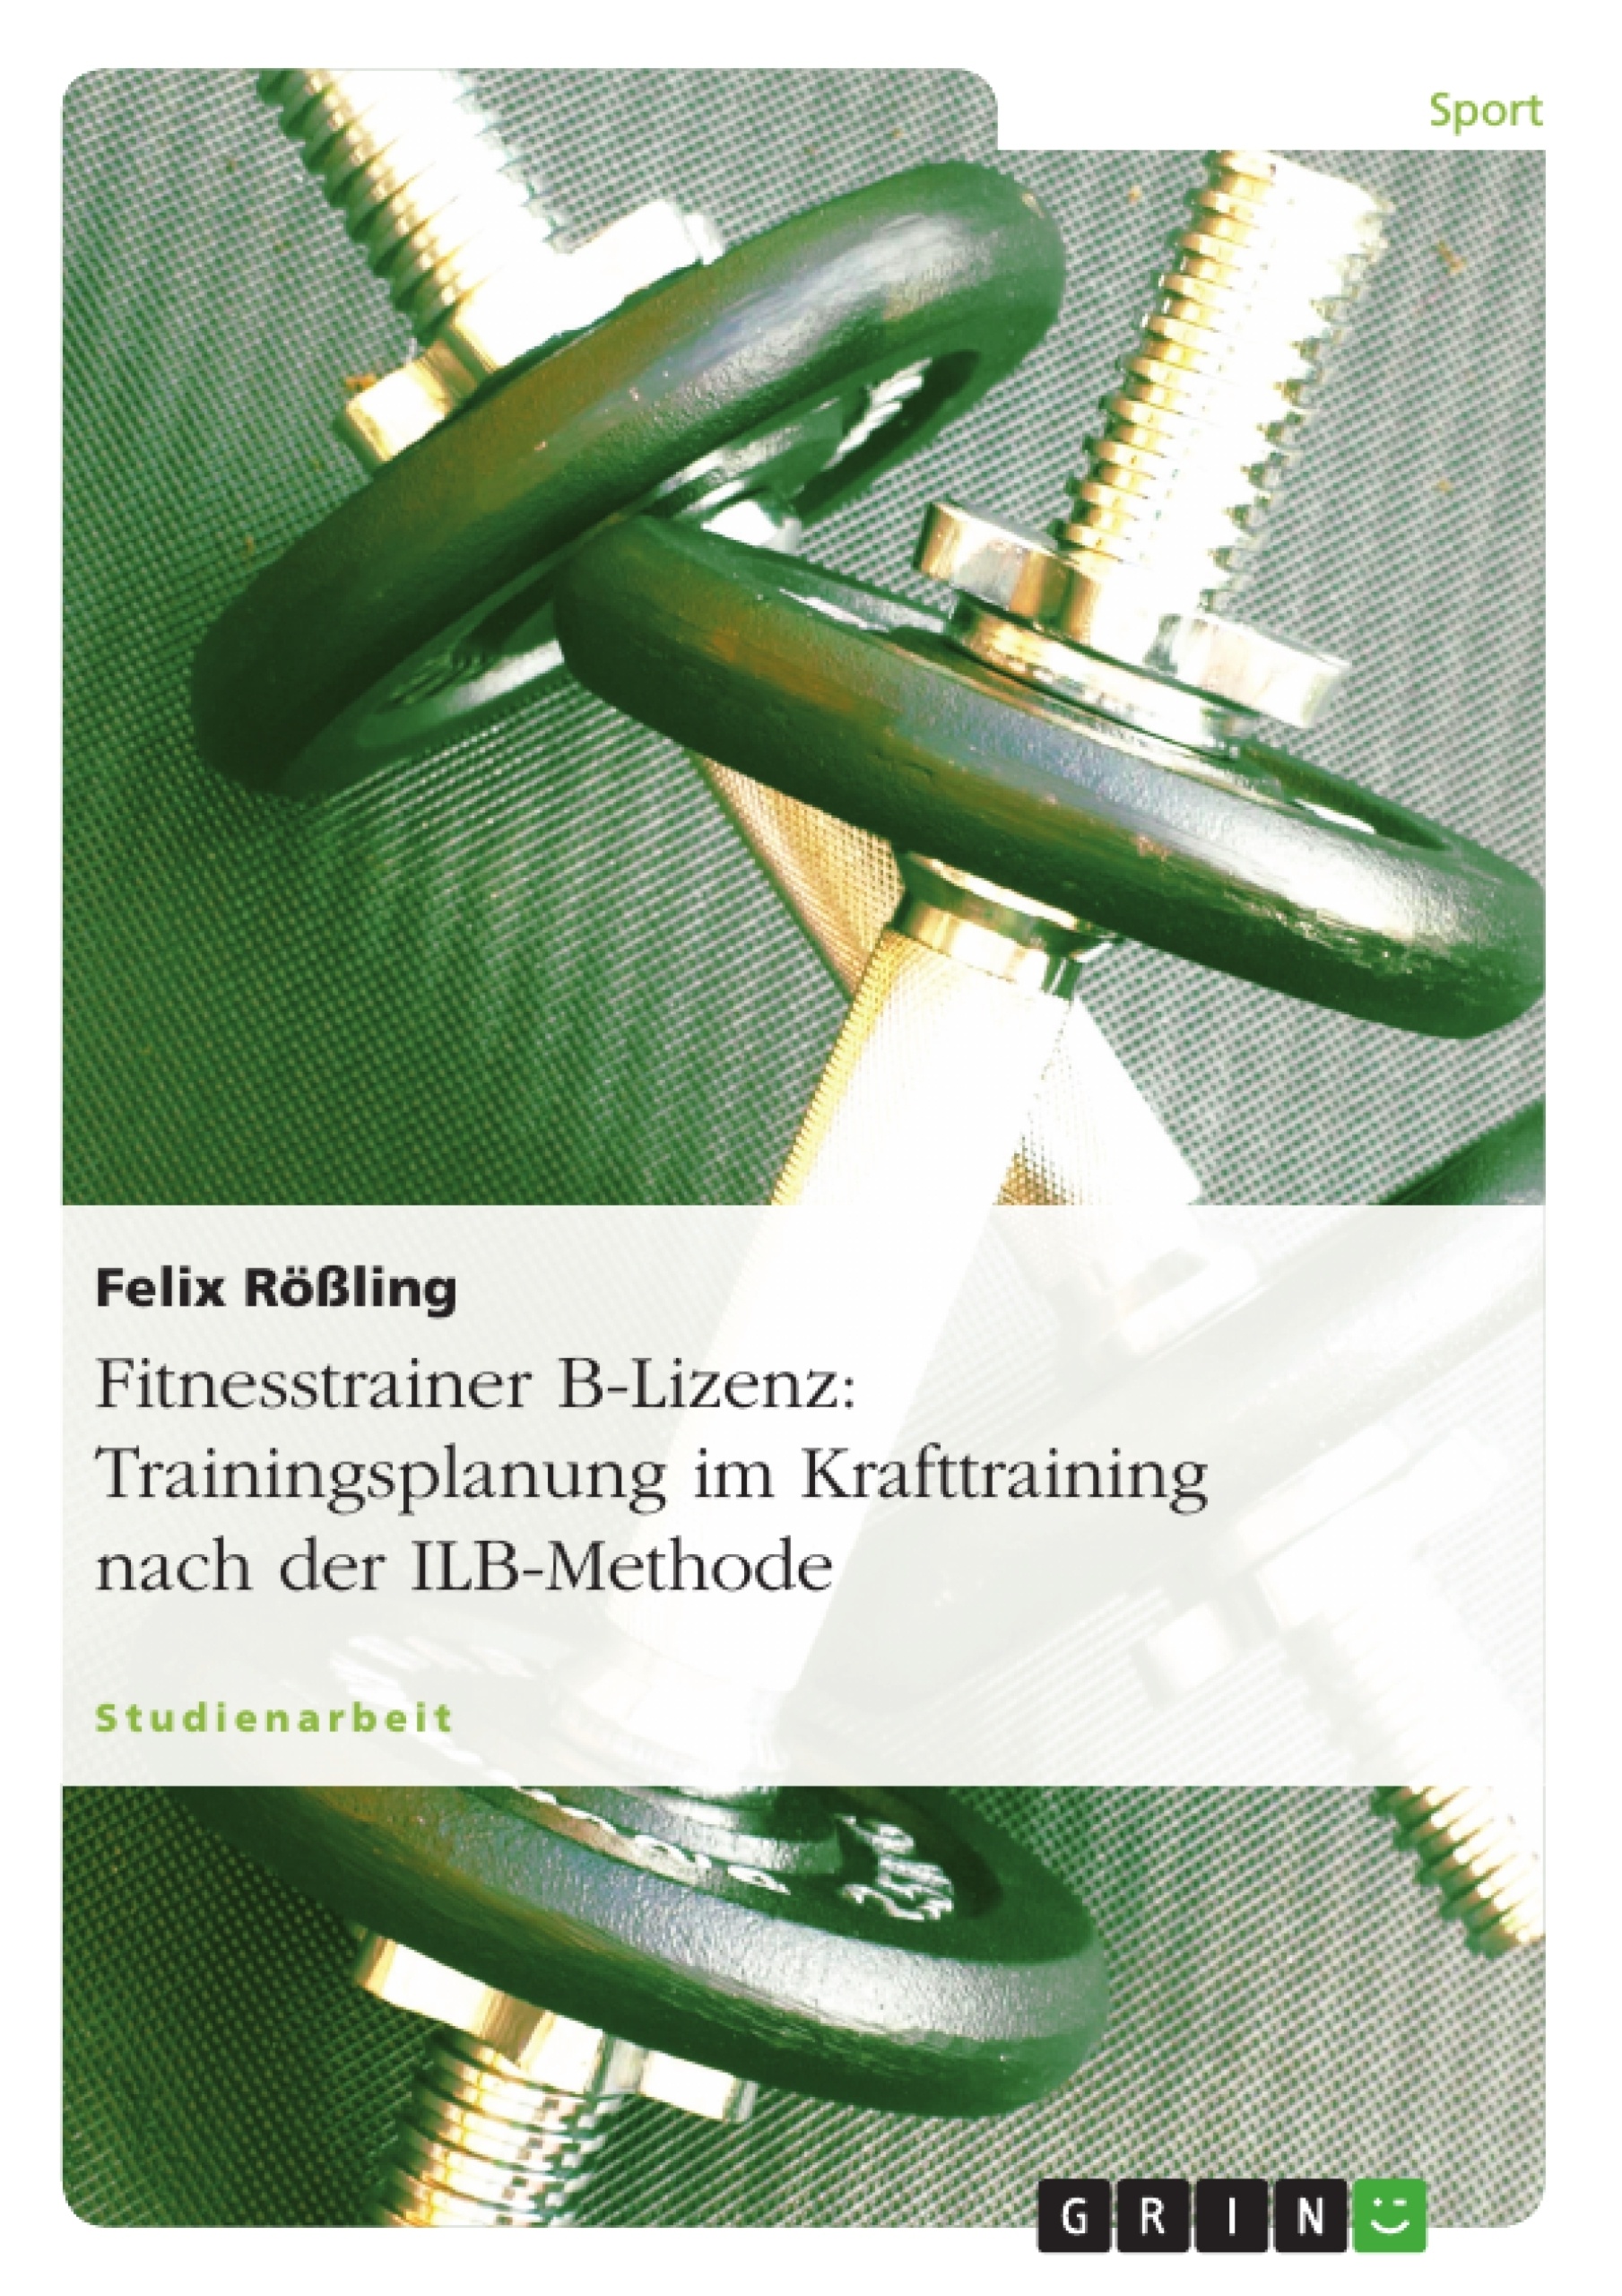 Título: Fitnesstrainer B-Lizenz: Trainingsplanung im Krafttraining nach der ILB-Methode